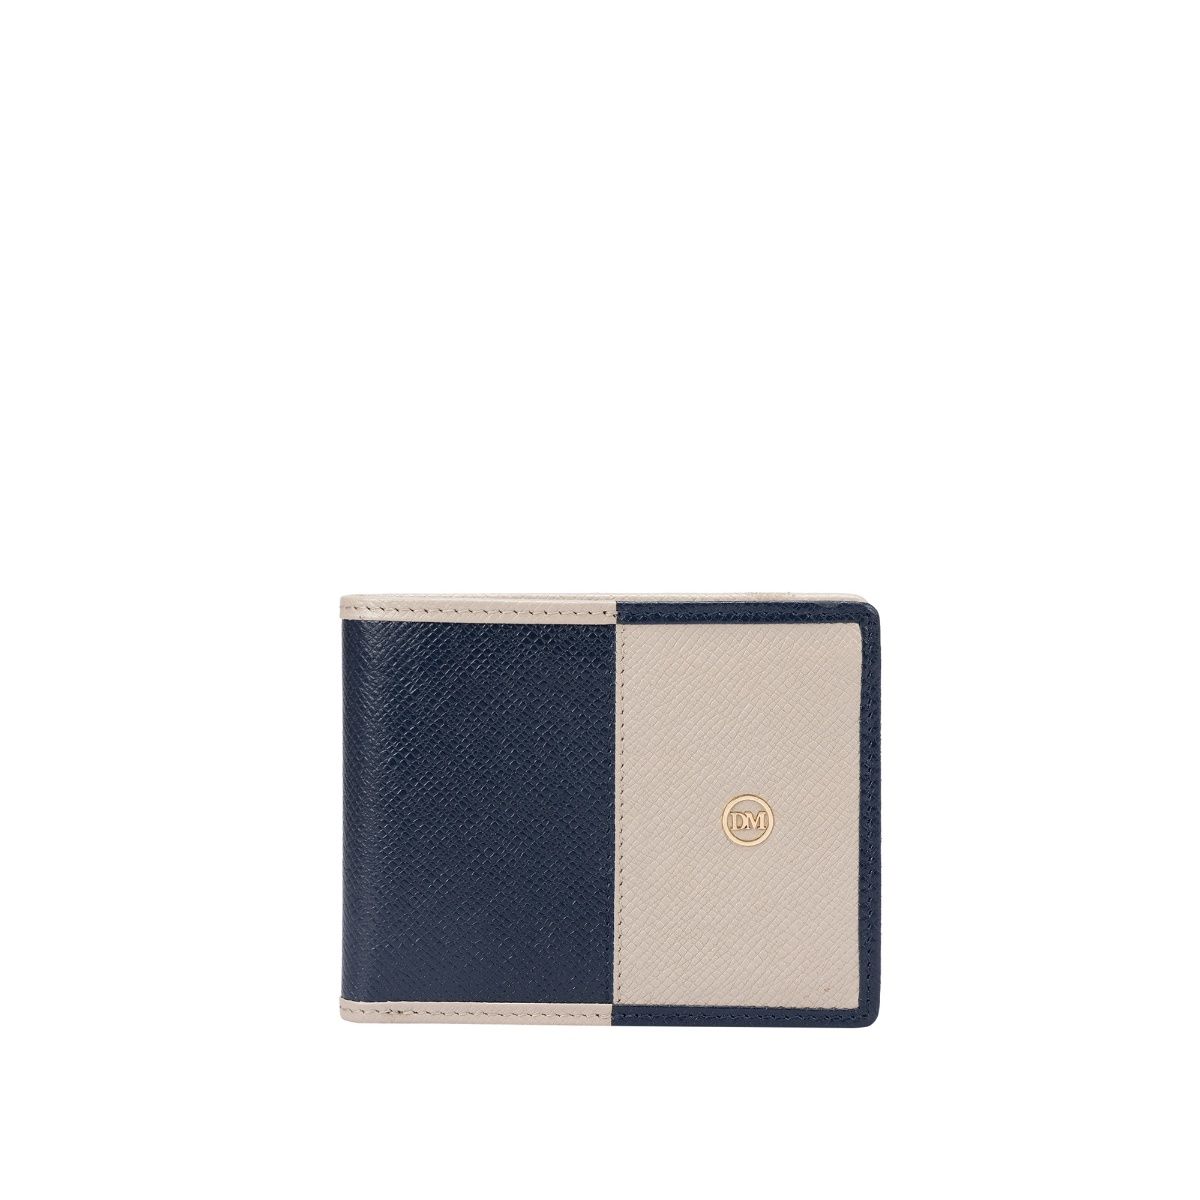 Da Milano Genuine Leather Blue & Brown Mens Wallet: Buy Da Milano